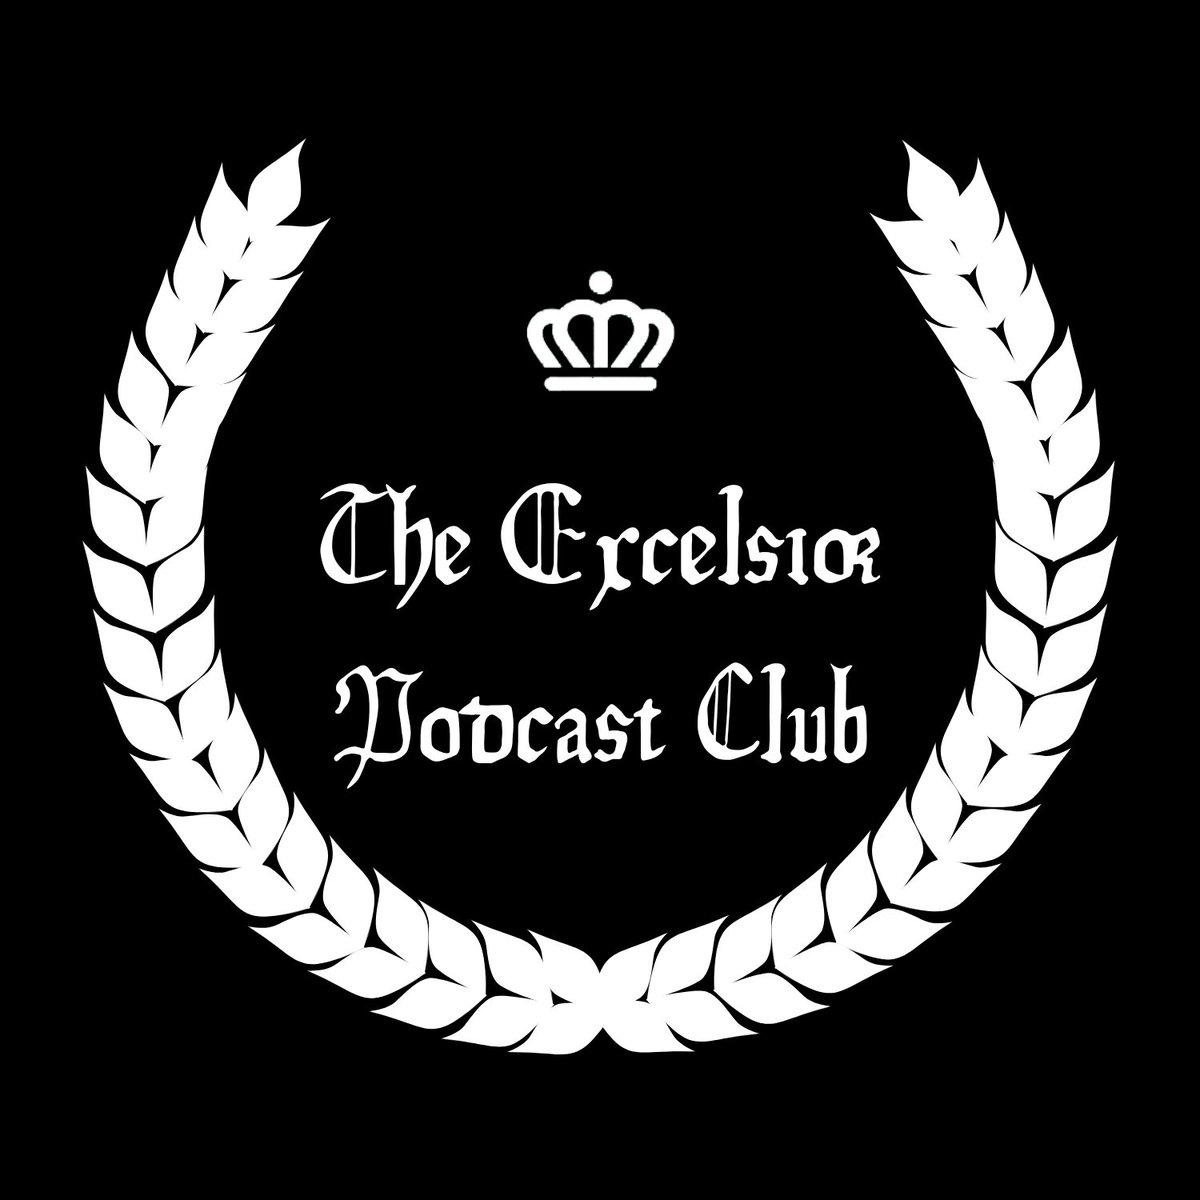 The Excelsior Podcast Club

#podcast #podcasting #podcasts #podcastlife #podcasters #podcastshow #podcastingwhileblack #blacklivesmatter #blackpodcasts #newpodcast #blackpodcasters #podsincolor #dopeblackpods  #shareblackstories #blackpodcastnetwork #newpodcastepisode